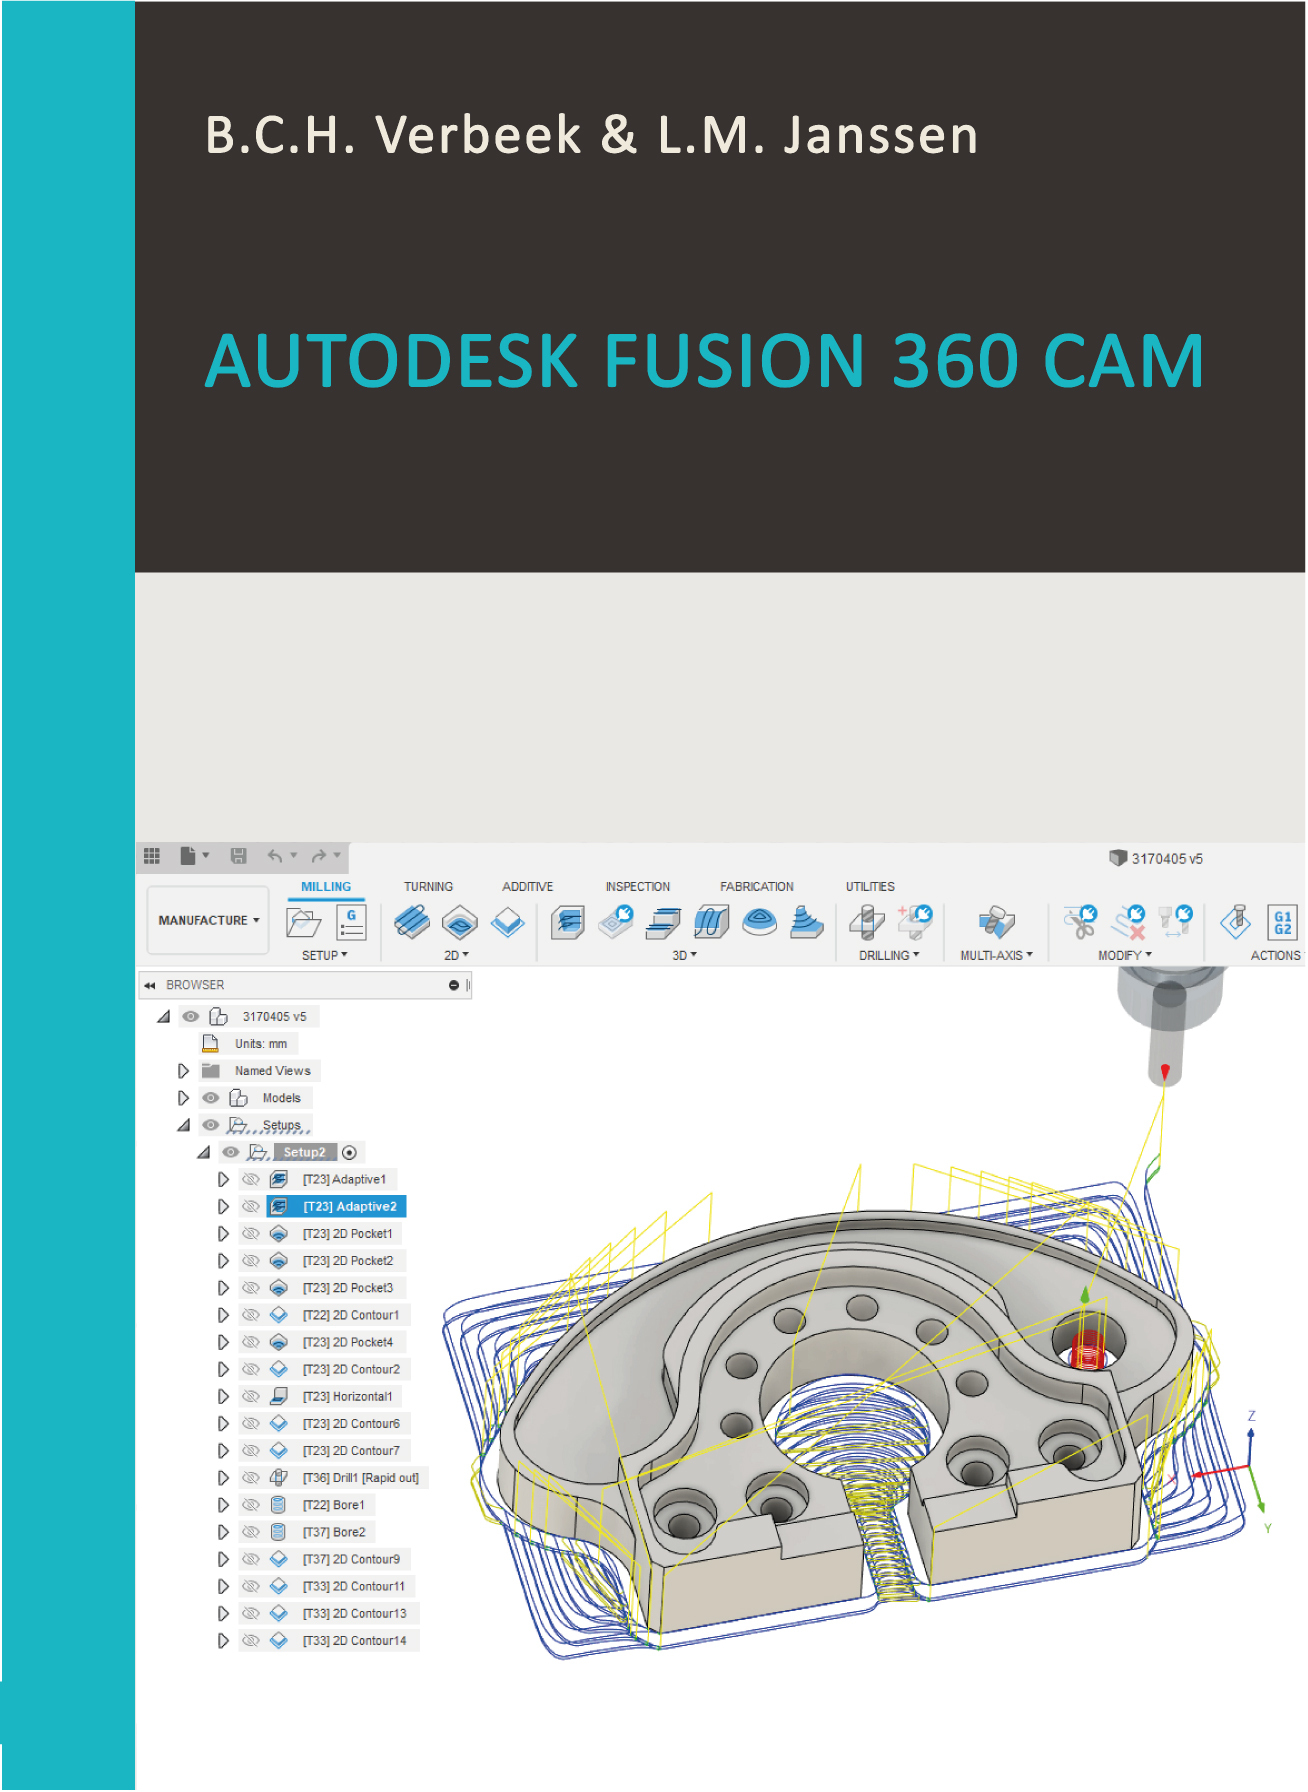 Fusion360's thumbnail image